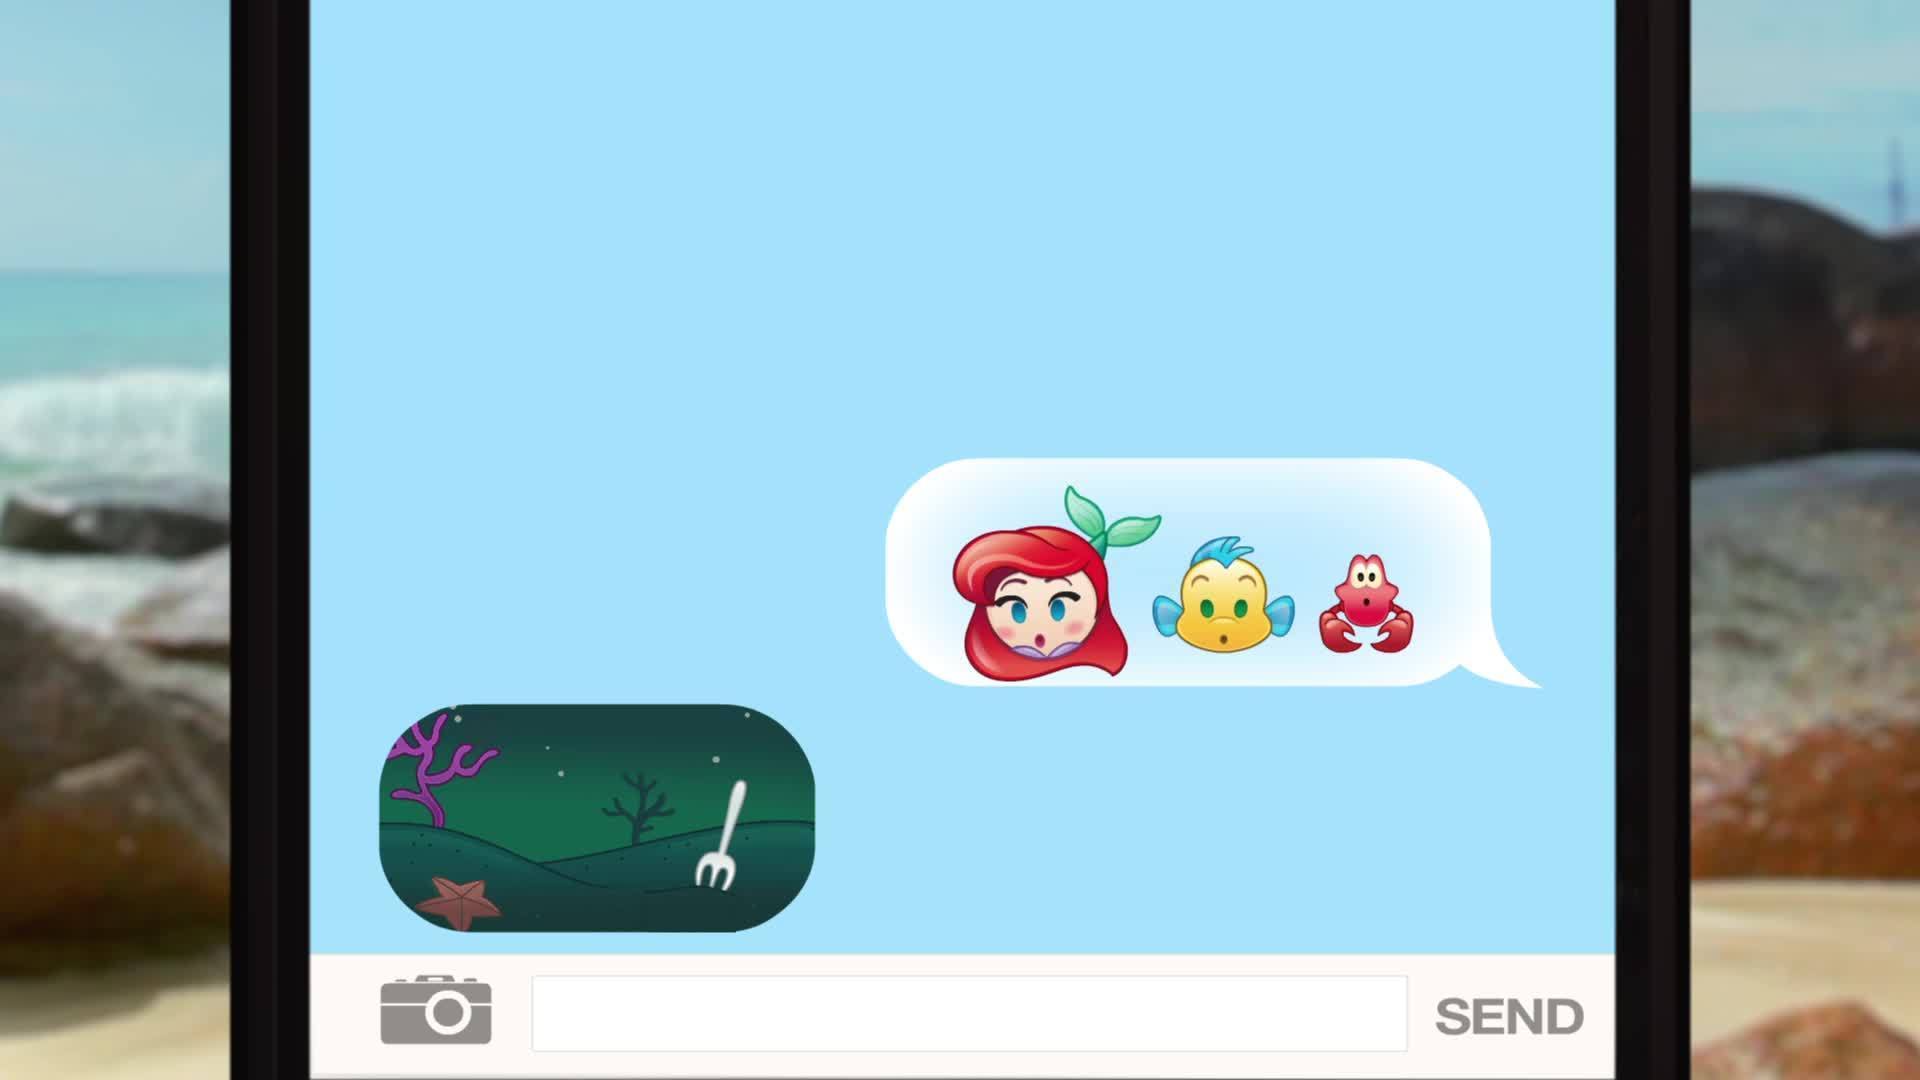 The Little Mermaid As Told By Emoji